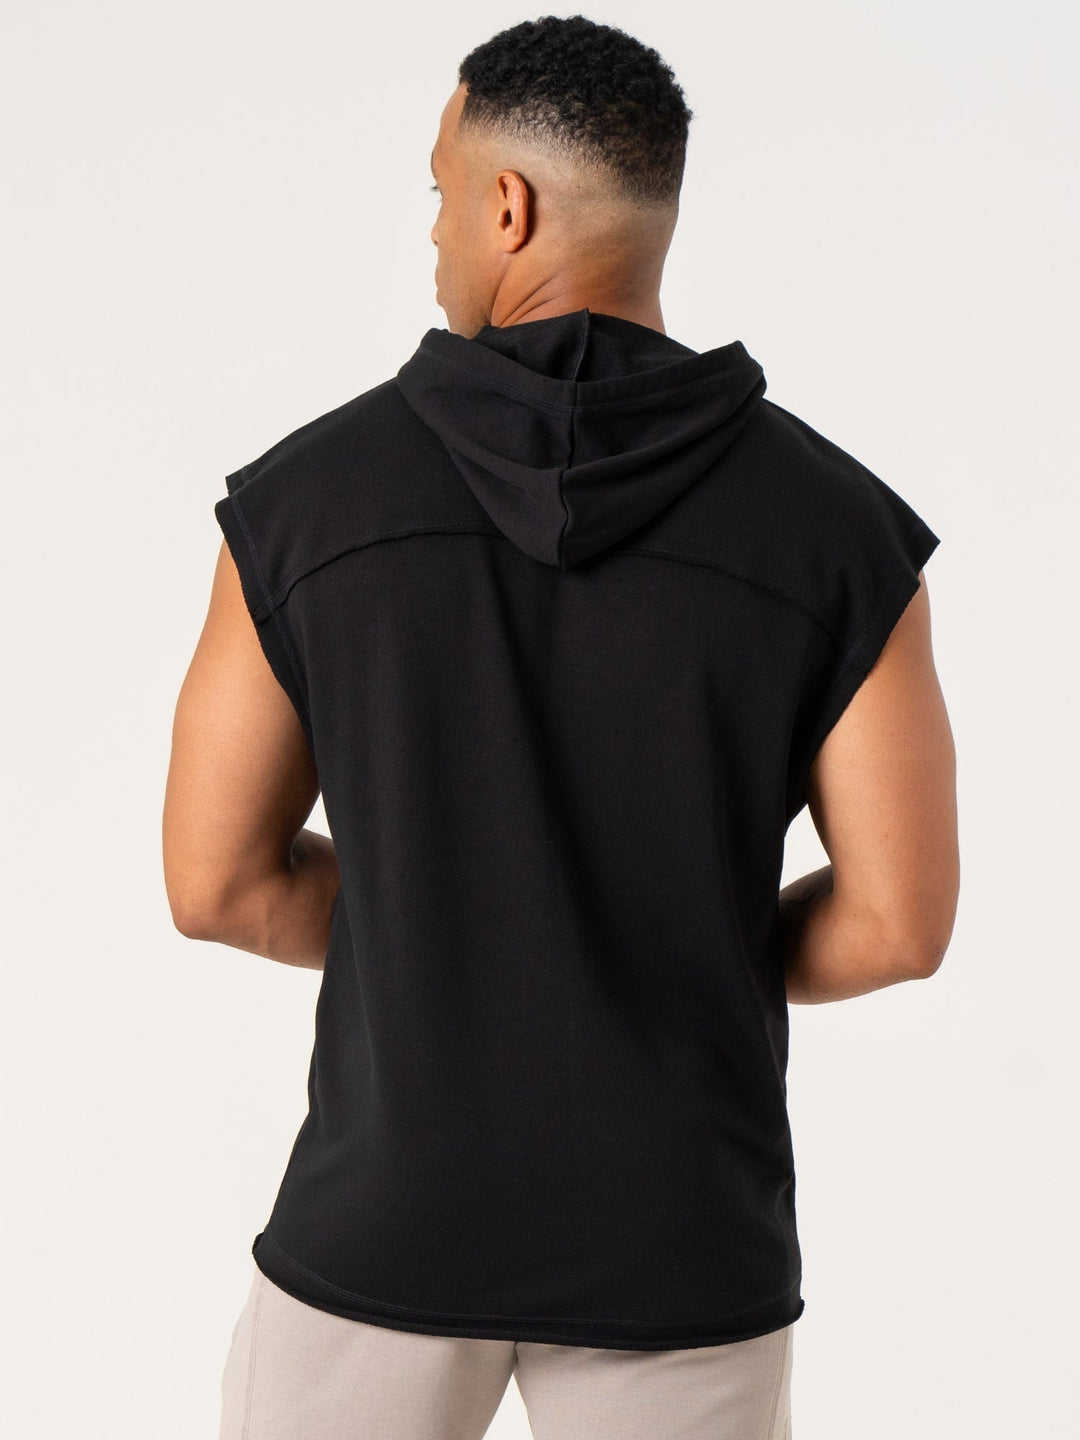 Pursuit Fleece Sleeveless Hoodie - Black Clothing Ryderwear 